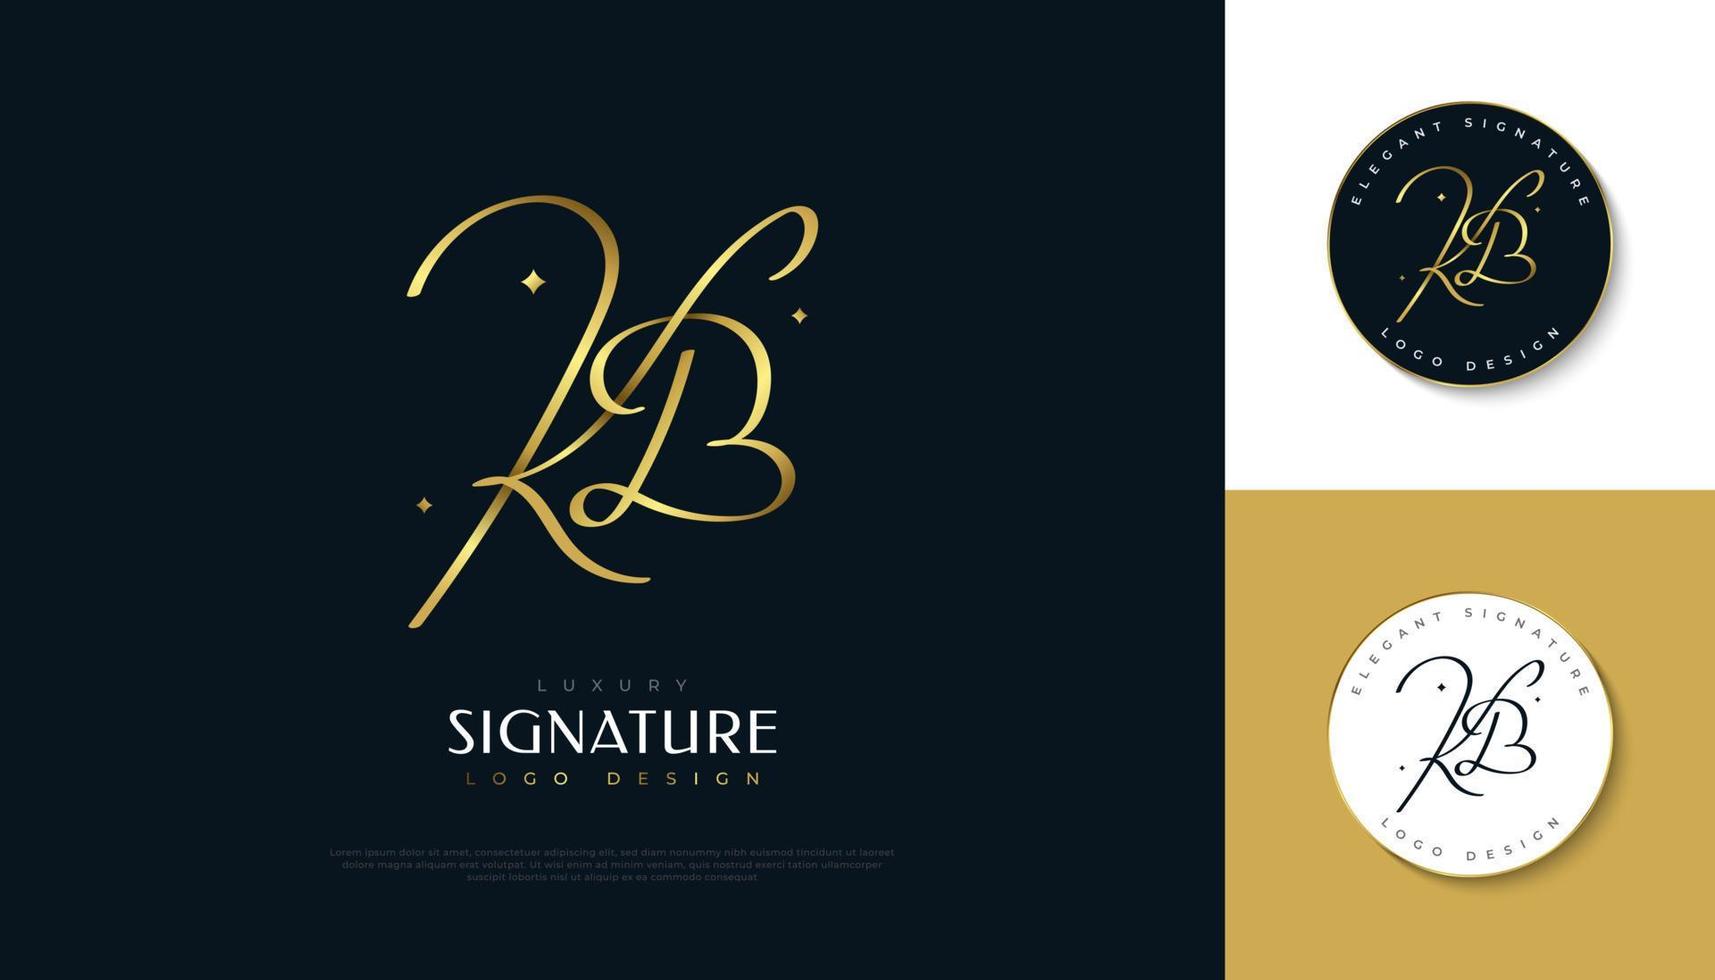 design de logotipo k e b inicial elegante e mínimo com estilo de caligrafia. logotipo de assinatura de letra kb com estilo de caligrafia dourada para casamento, moda, joias, boutique, botânica e logotipo da marca vetor